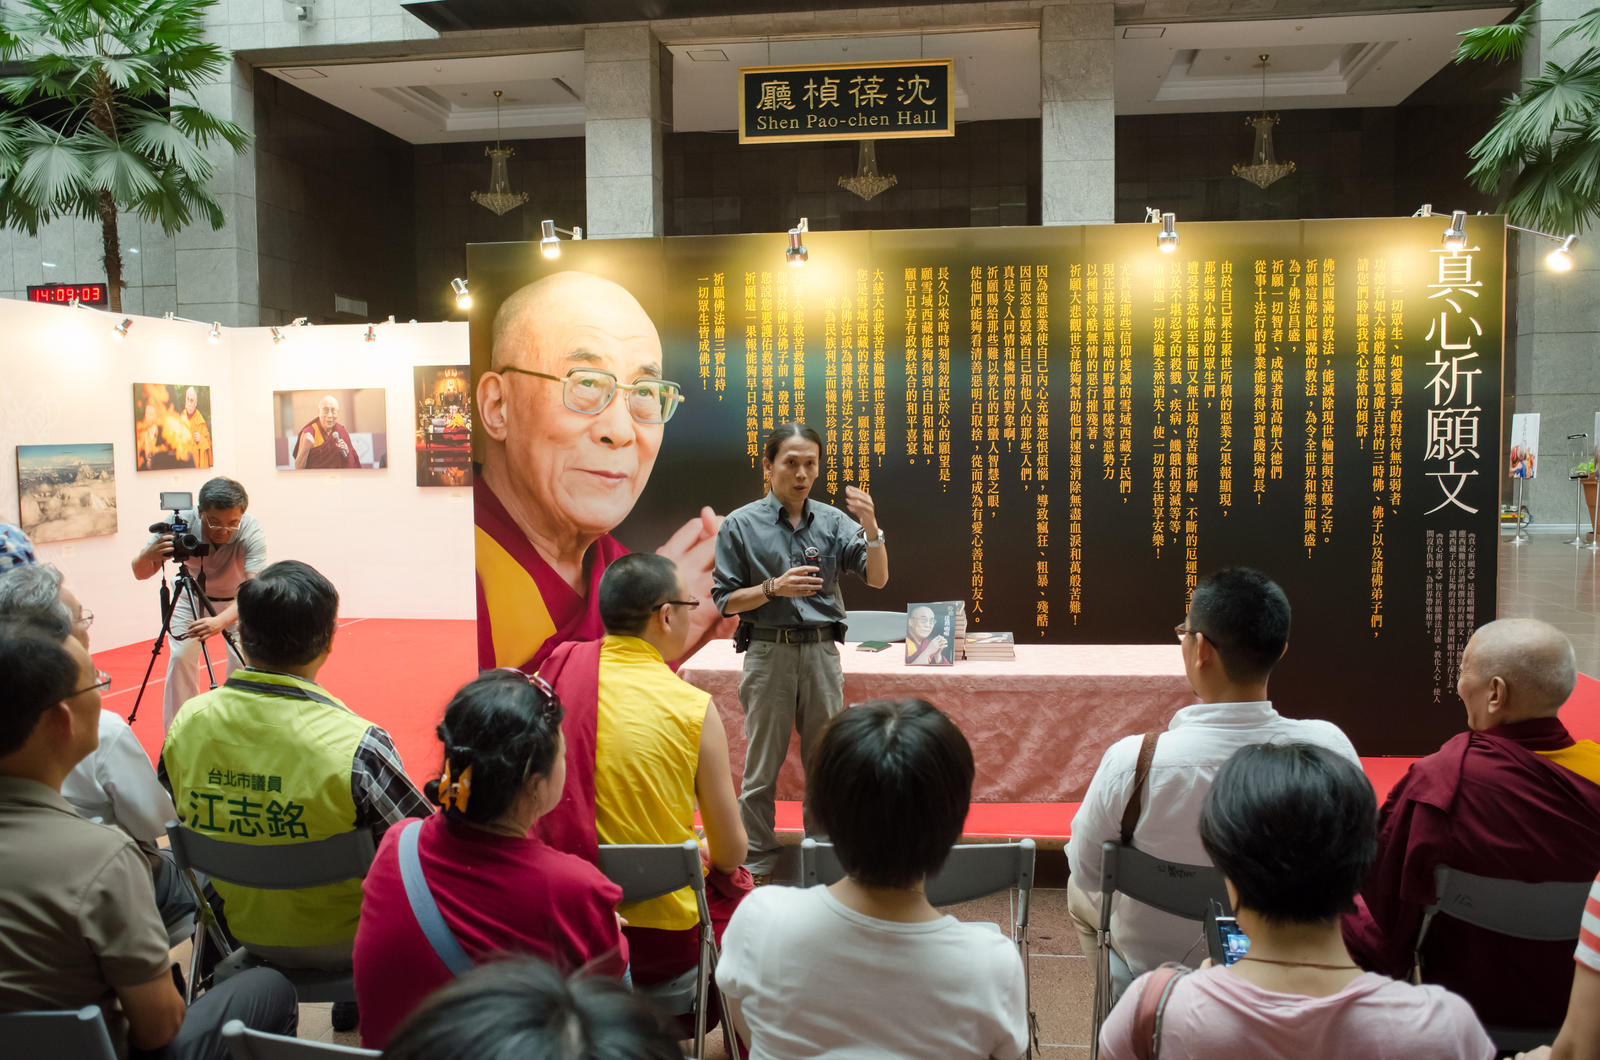 The 14th Dalai Lama photography exhibition